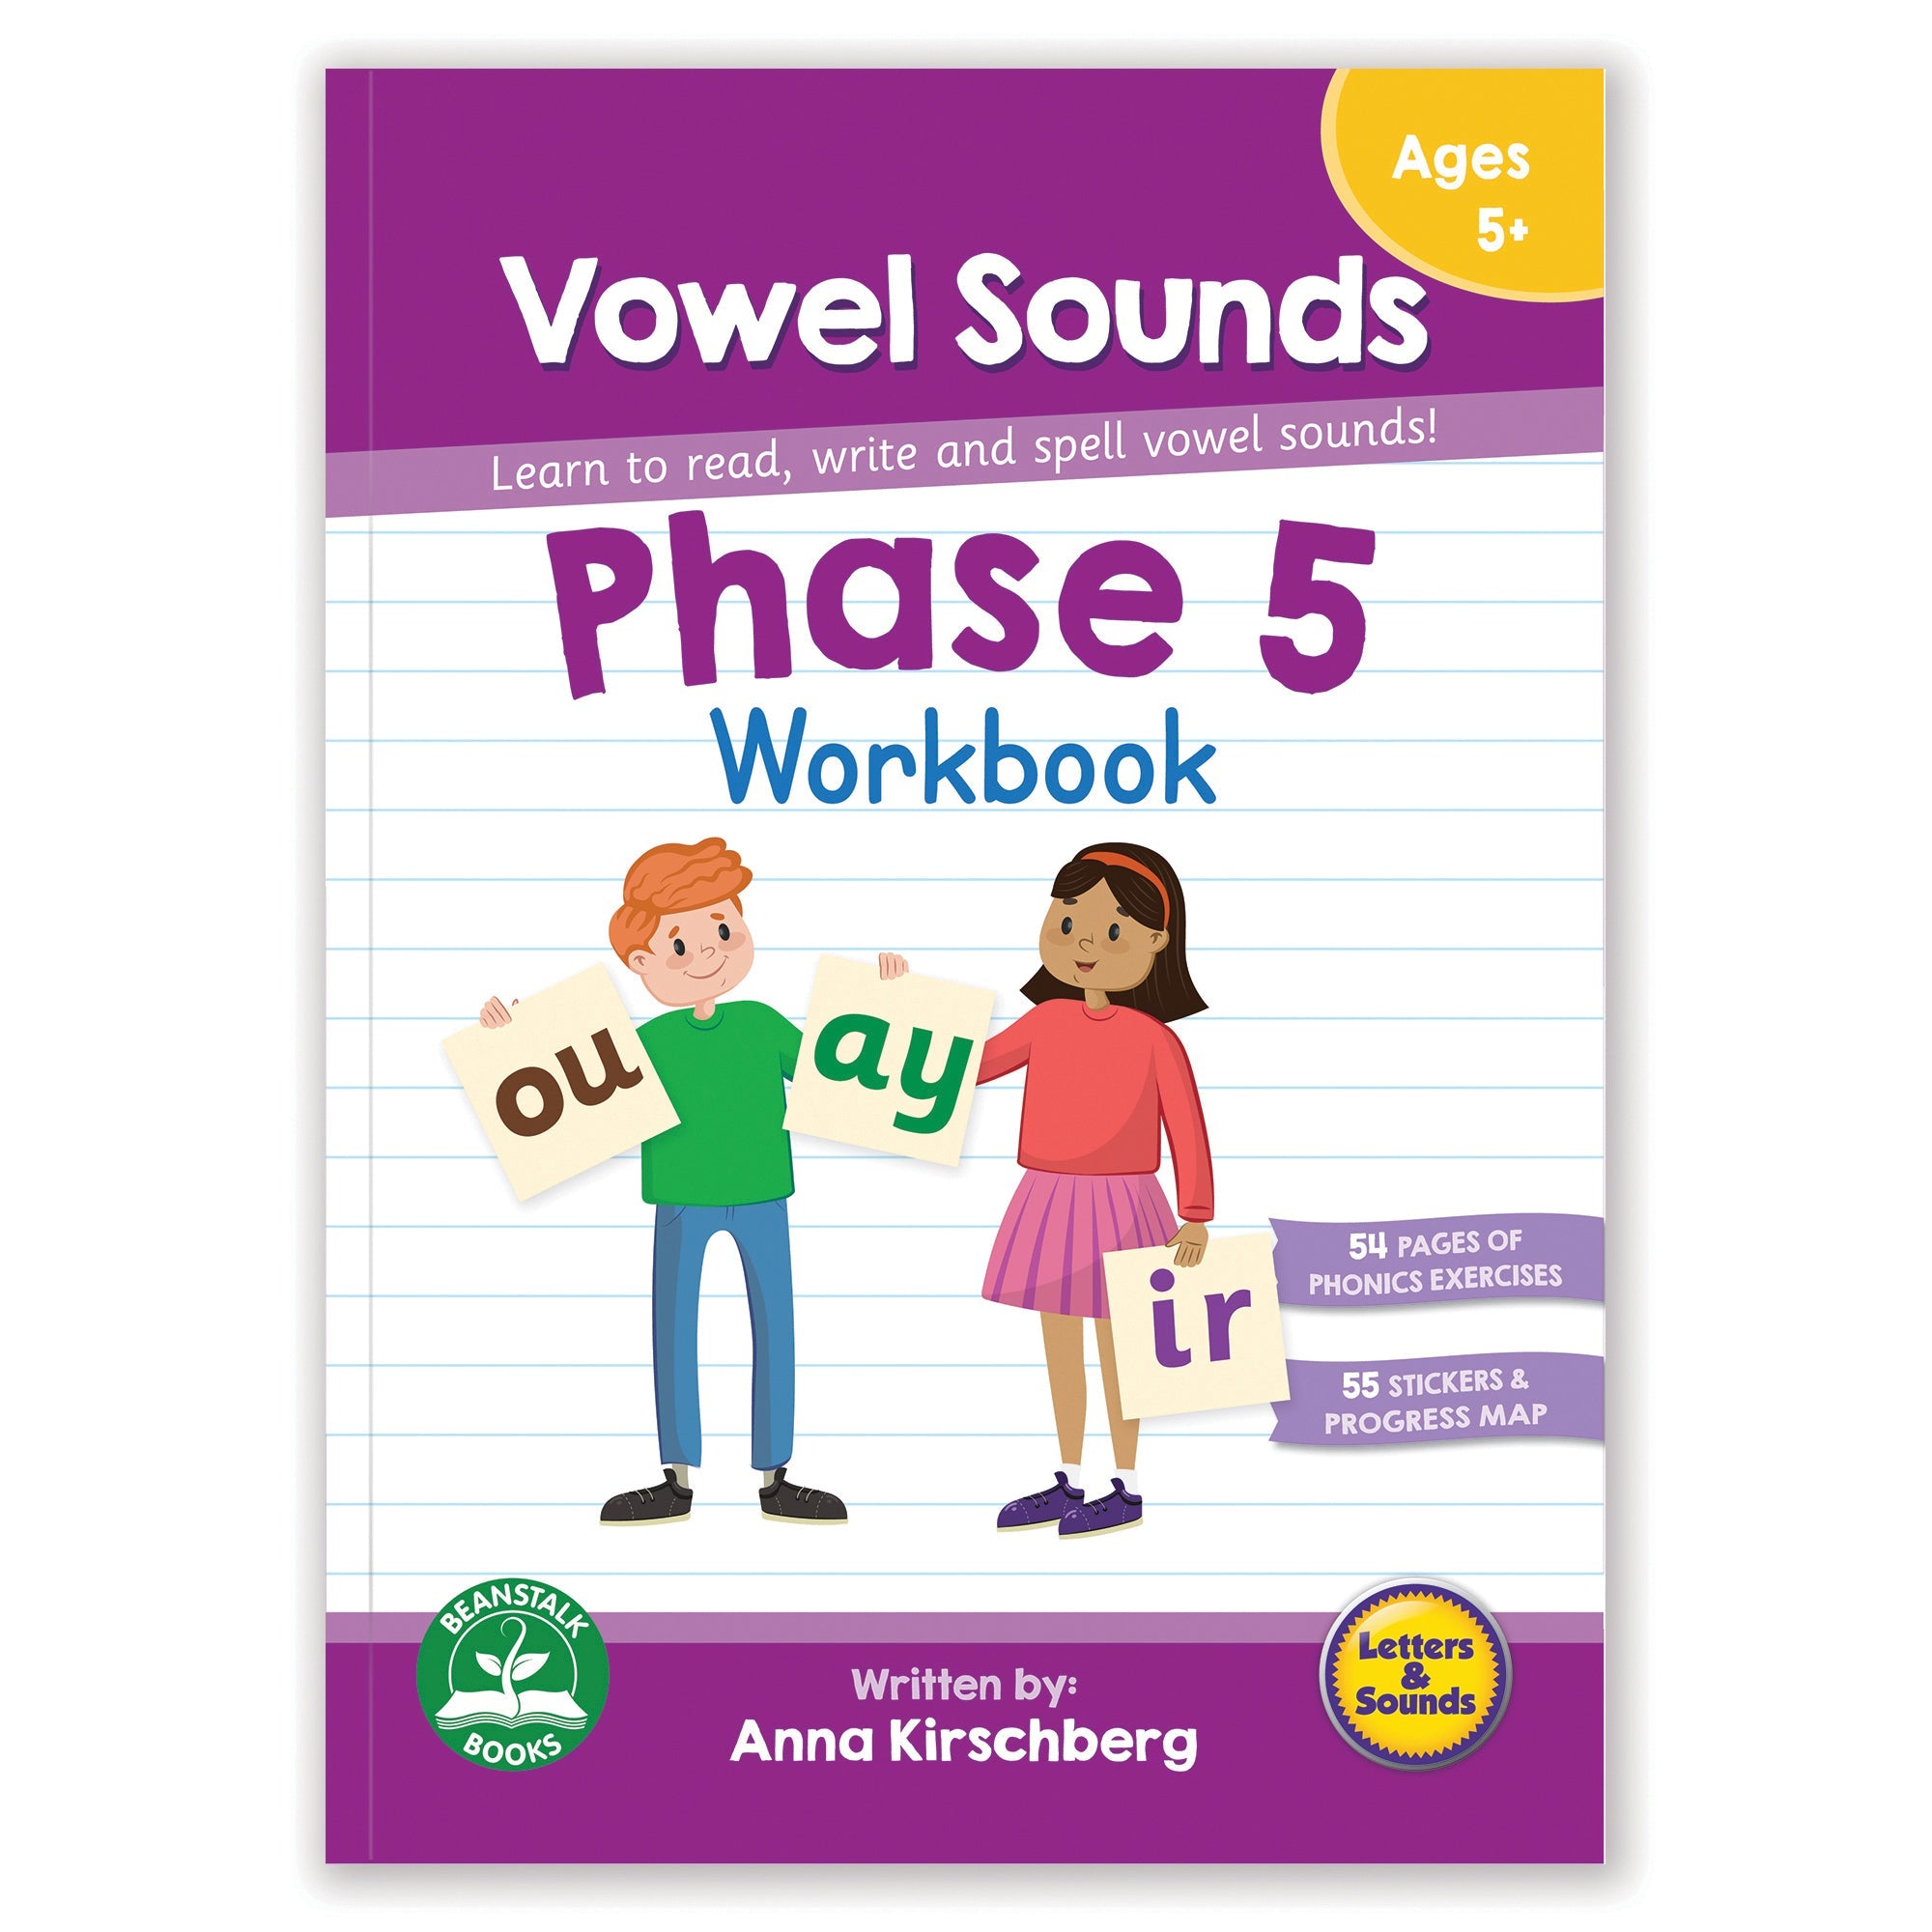 Letters & Sounds Phase 5 Vowel Sounds Classroom Kit